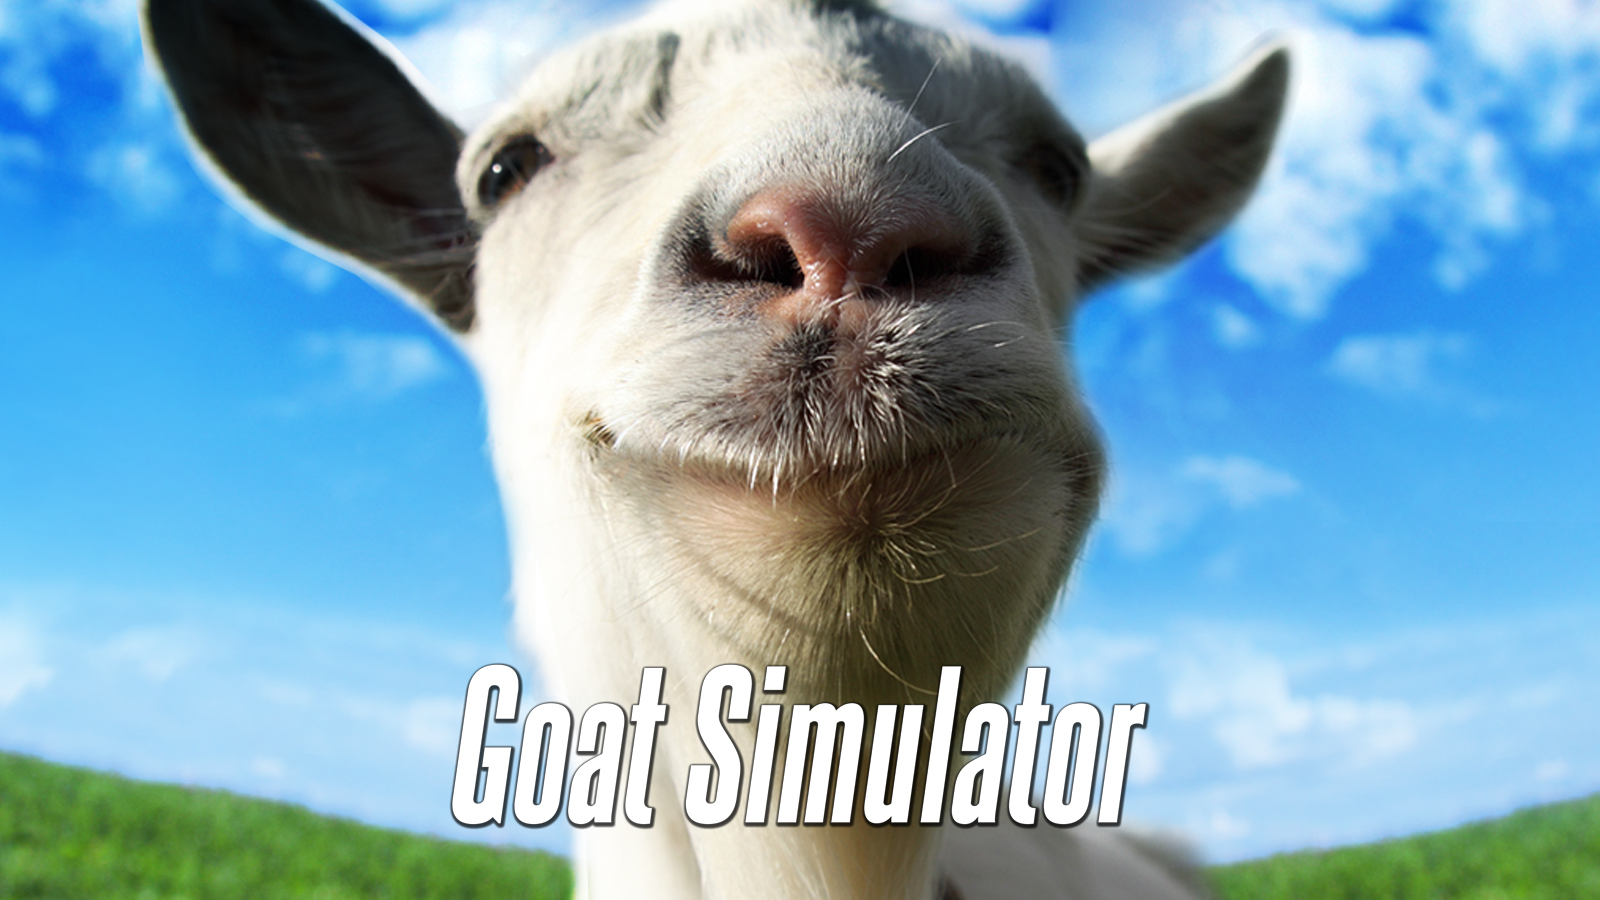 descargar goat simulator gratis sin utorrent movie